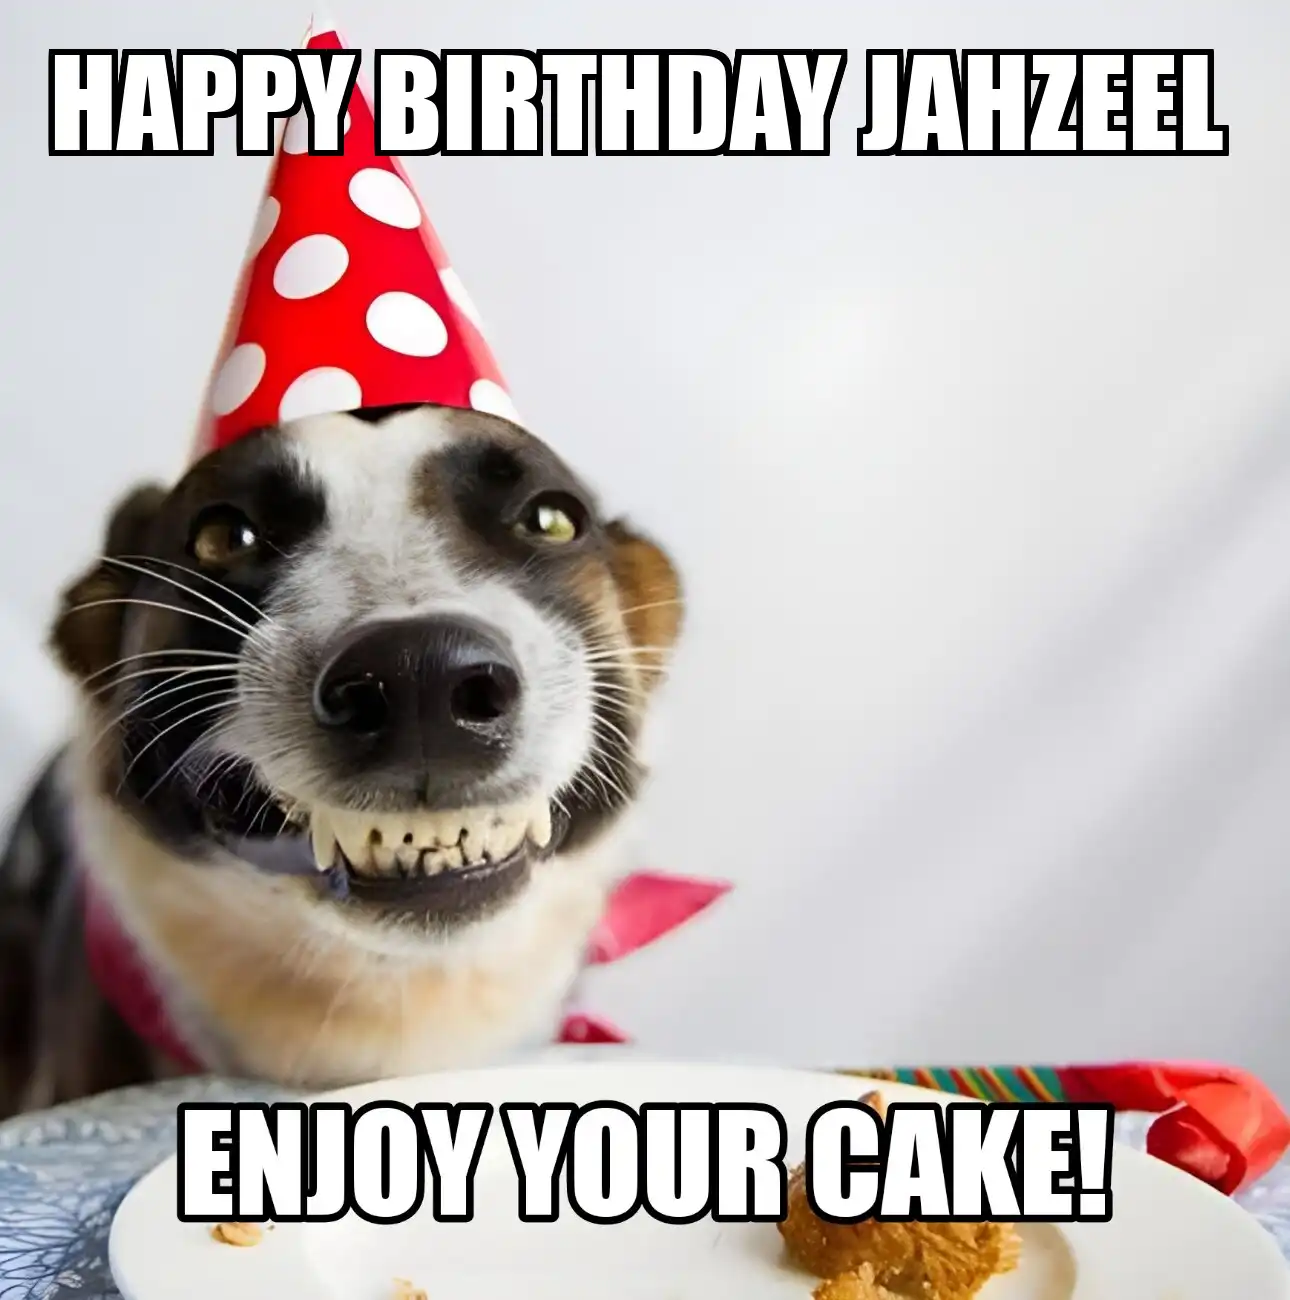 Happy Birthday Jahzeel Enjoy Your Cake Dog Meme